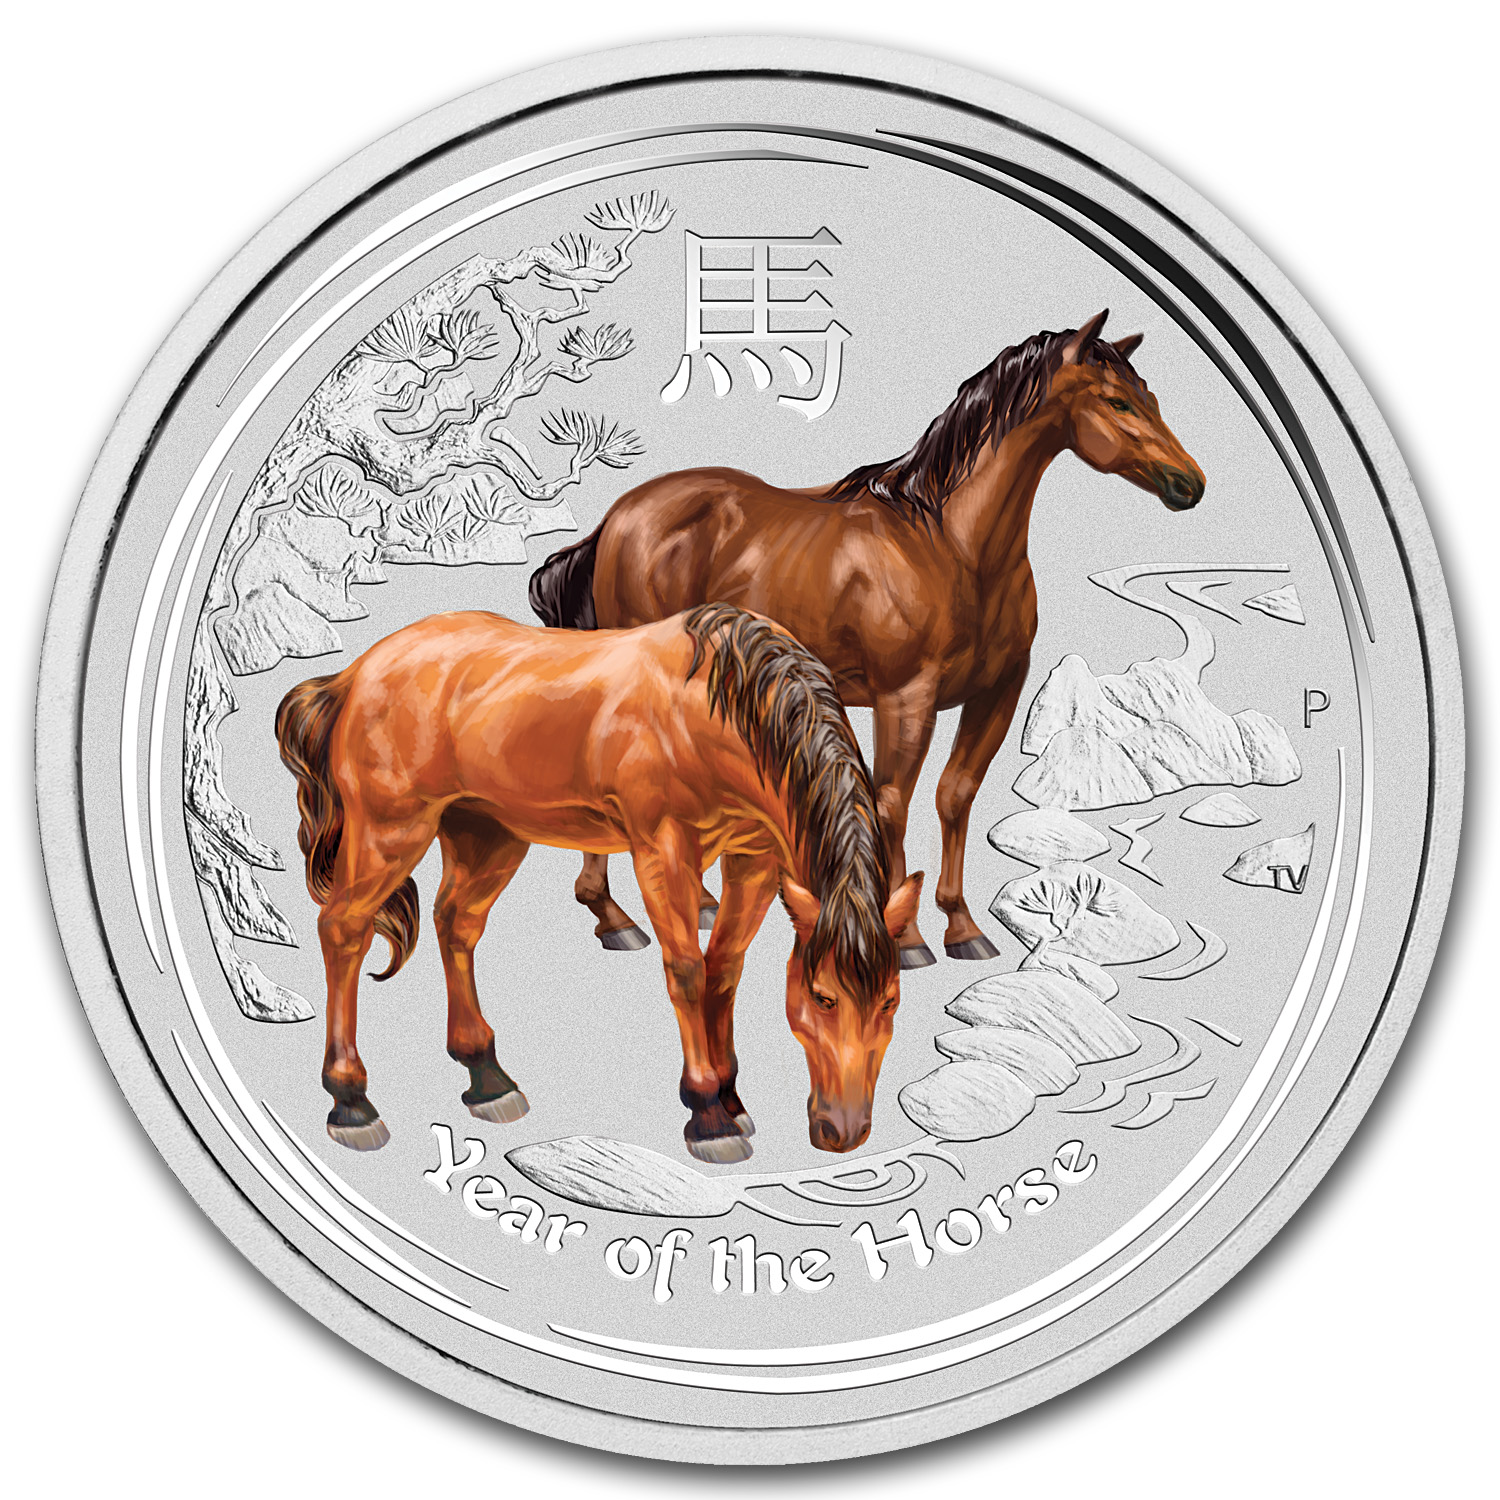 Buy 2014 Australia 1 oz Silver Lunar Horse BU (Colorized)